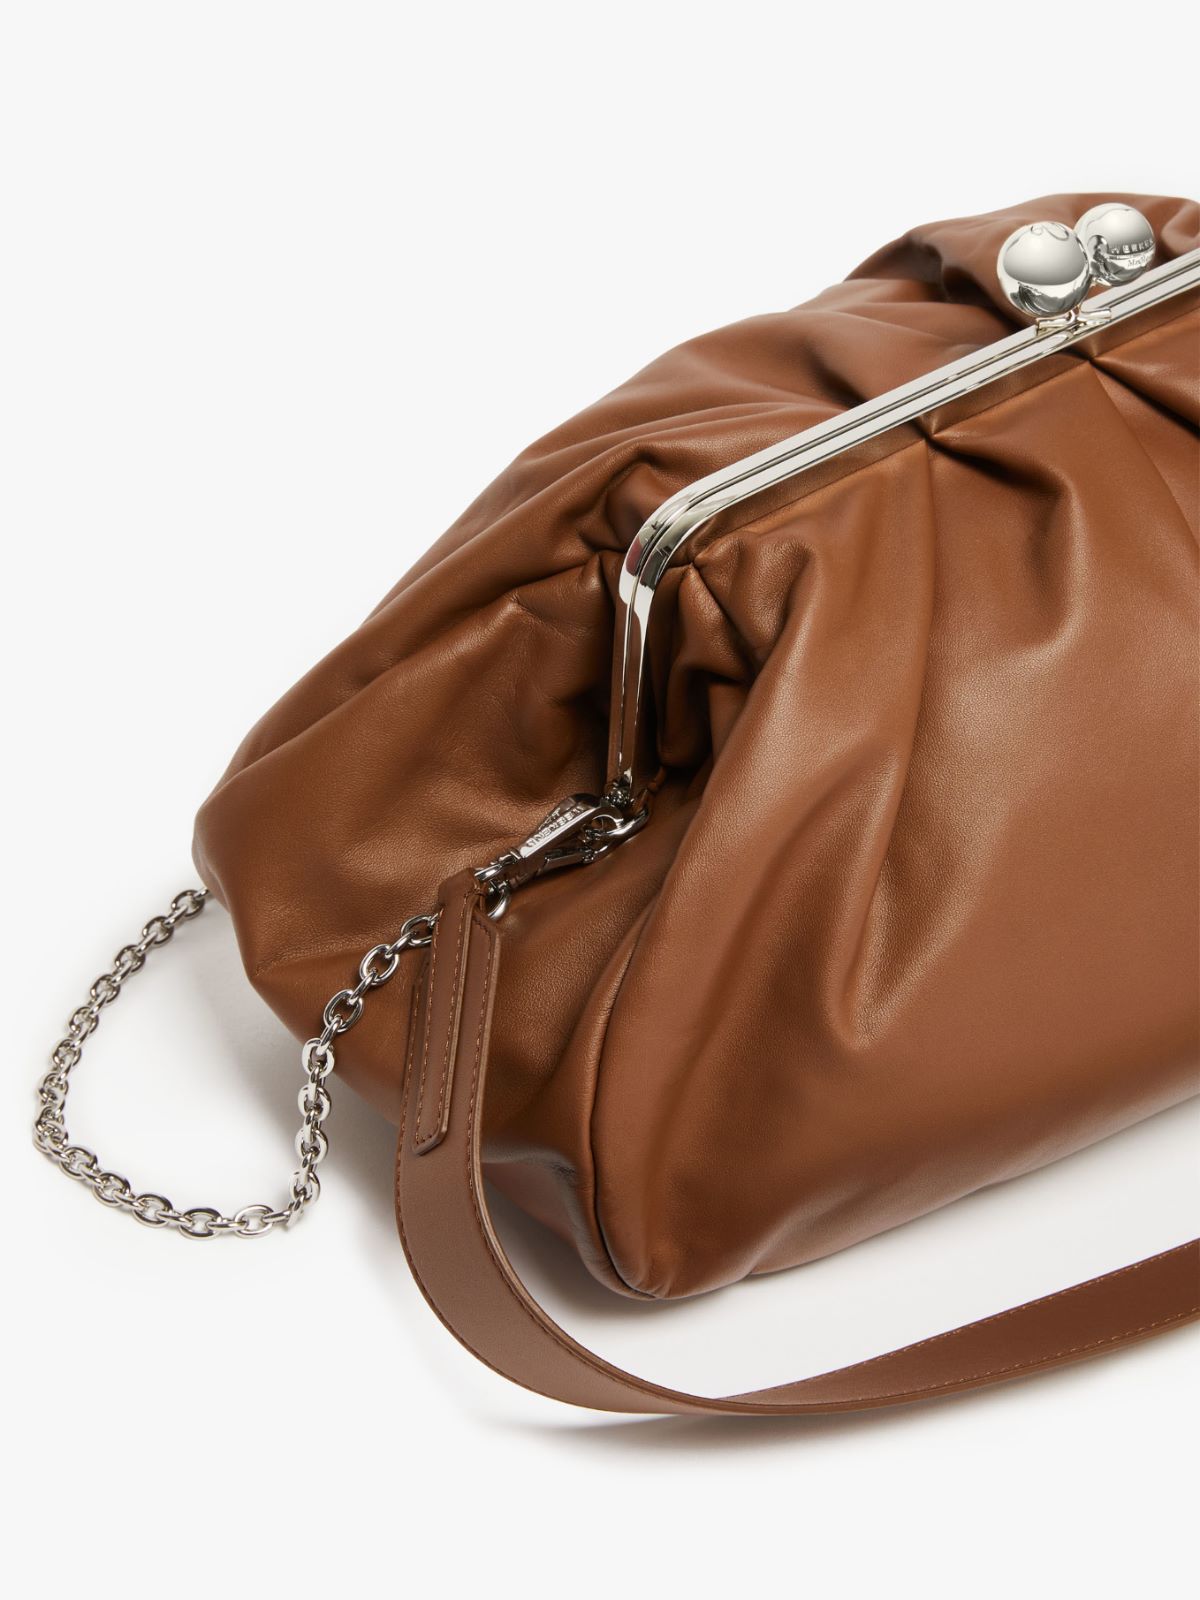 Large Pasticcino Bag in nappa leather - TOBACCO - Weekend Max Mara - 4